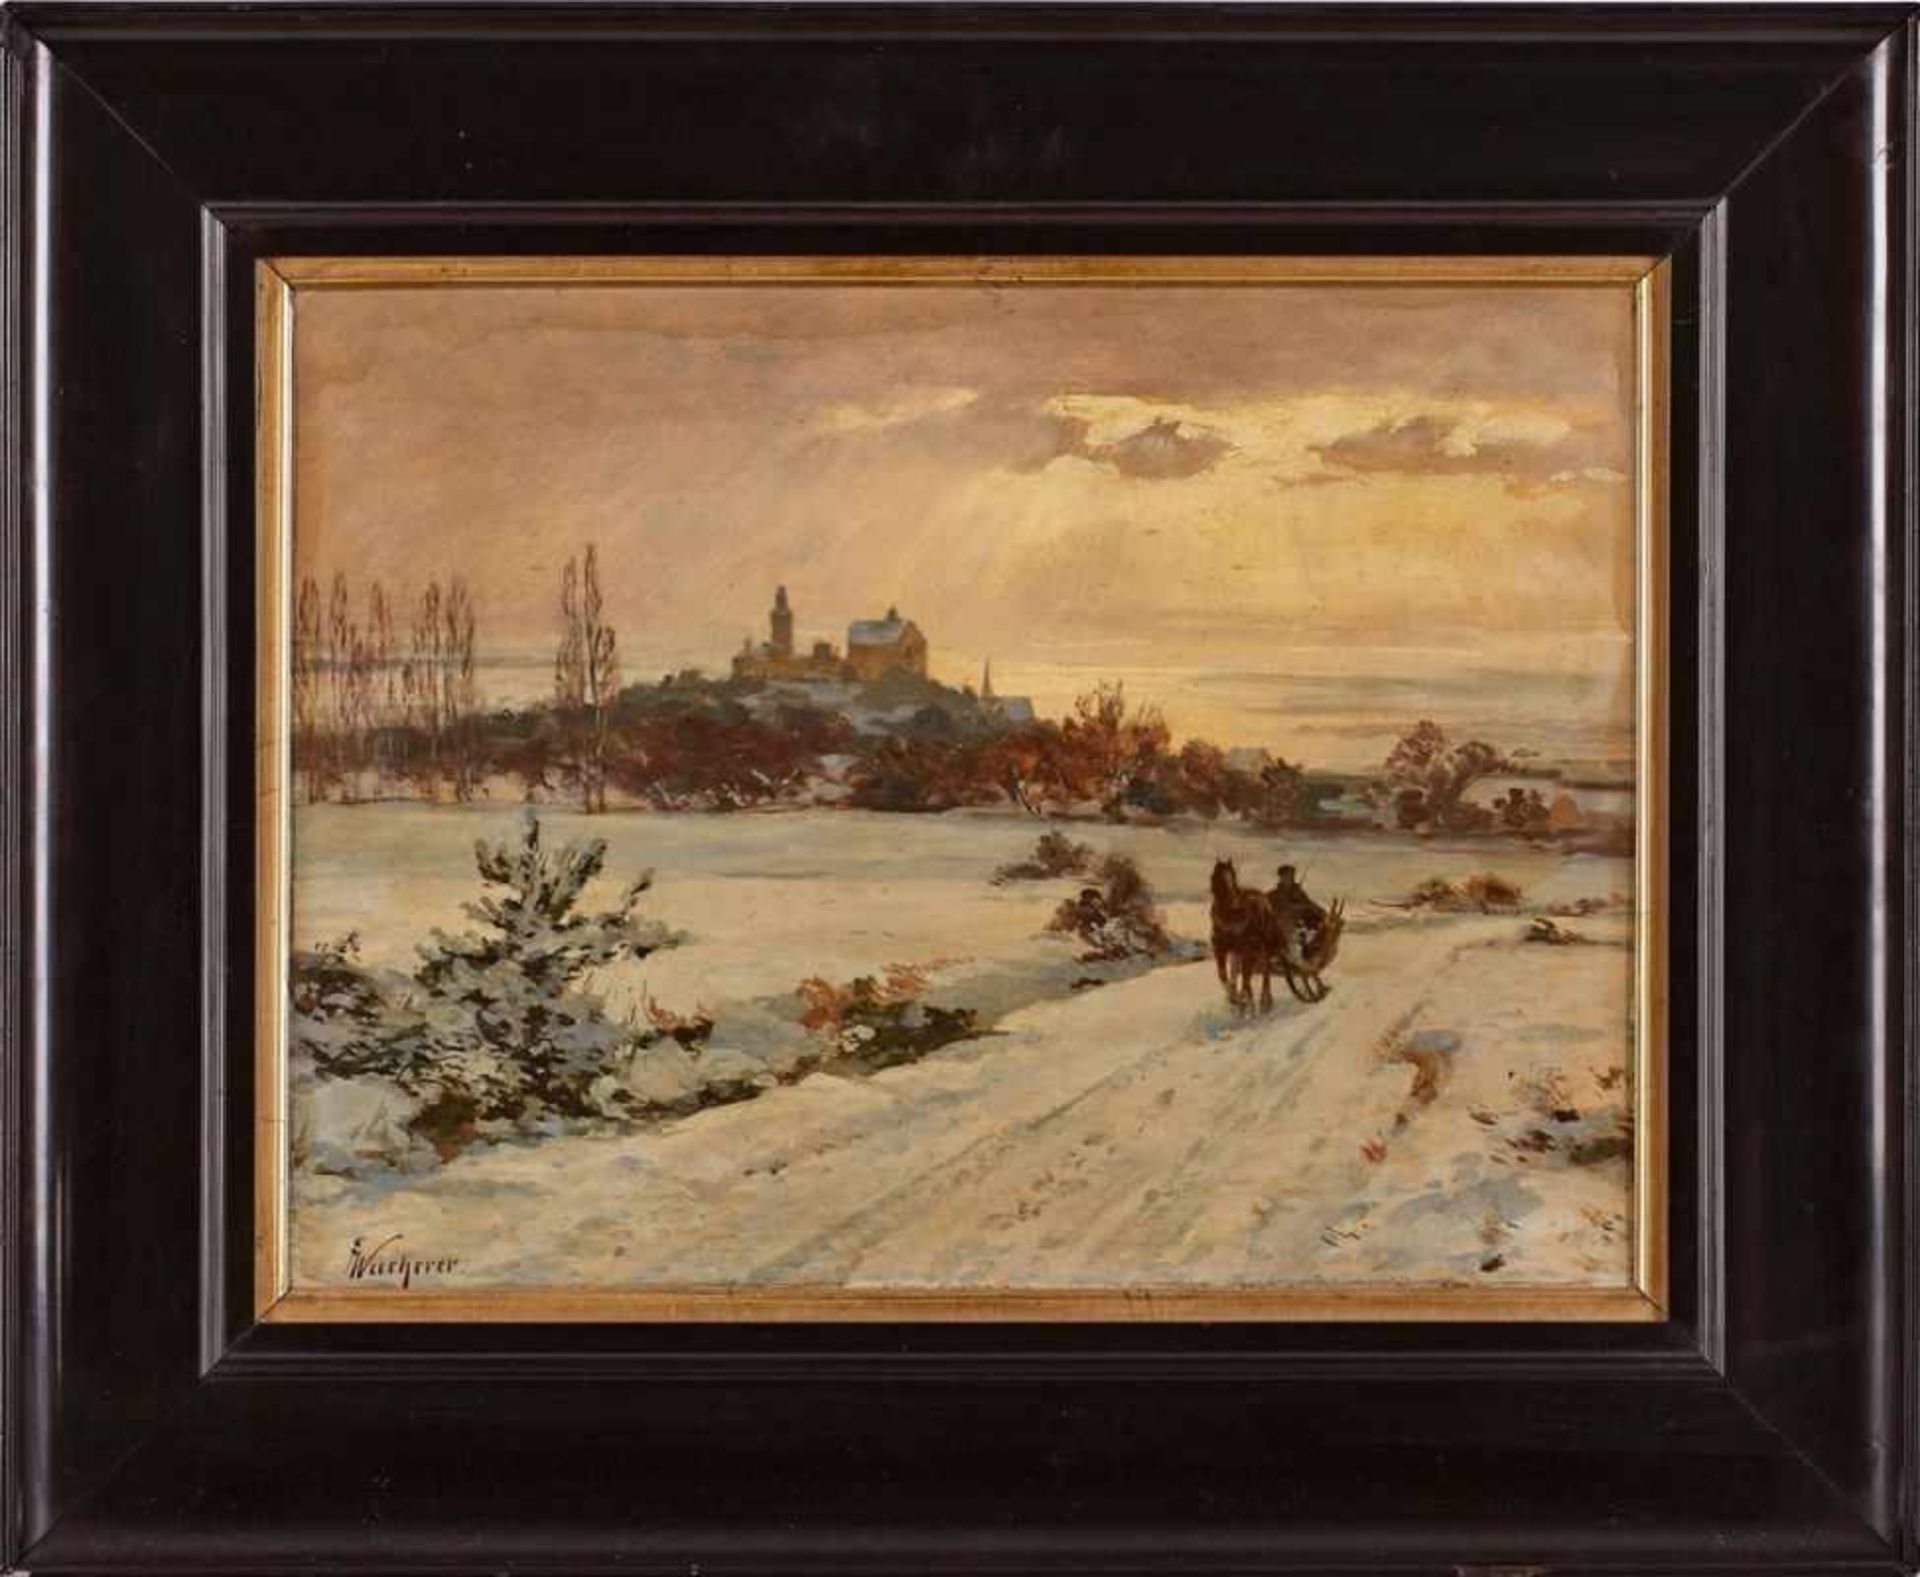 Gemälde Fritz Wucherer1873 Basel - 1948 Kronberg "Kronberg im Winter" u. li. sign. F. Wucherer verso - Image 2 of 2